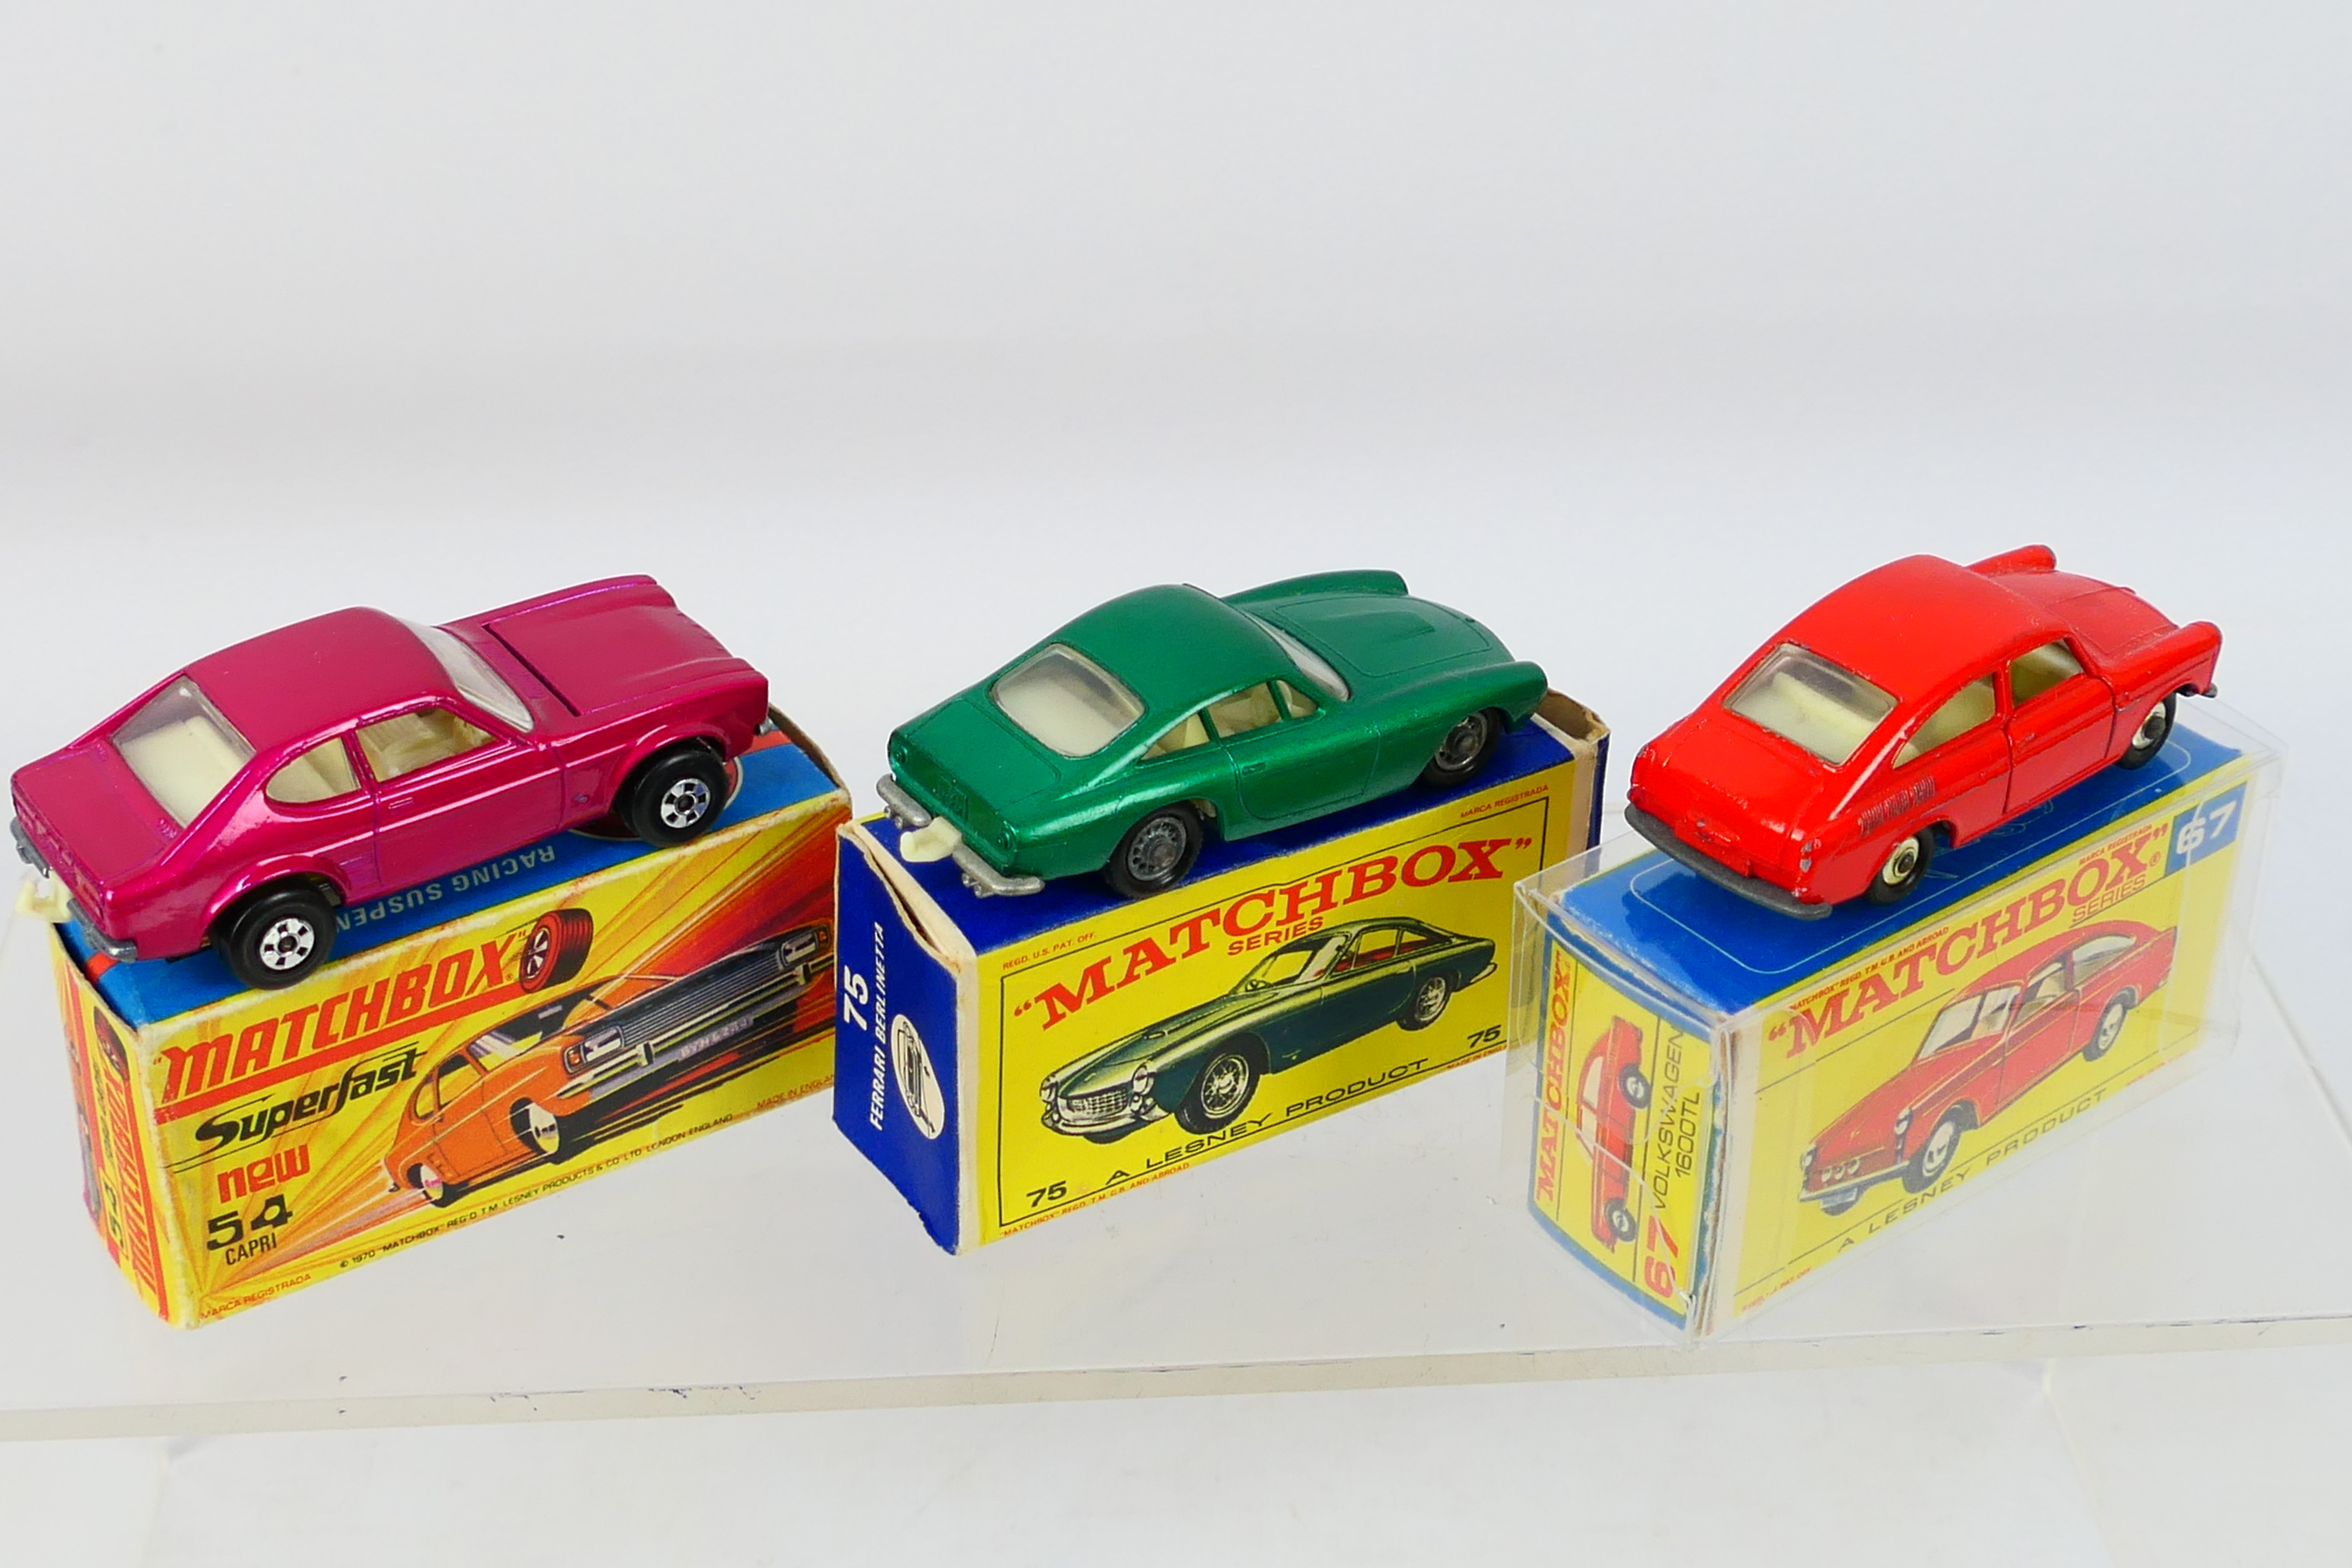 Matchbox - 3 x boxed models, Ford Capri # 54, Volkswagen 1600TL # 67 and Ferrari Berlinetta # 75. - Image 5 of 6